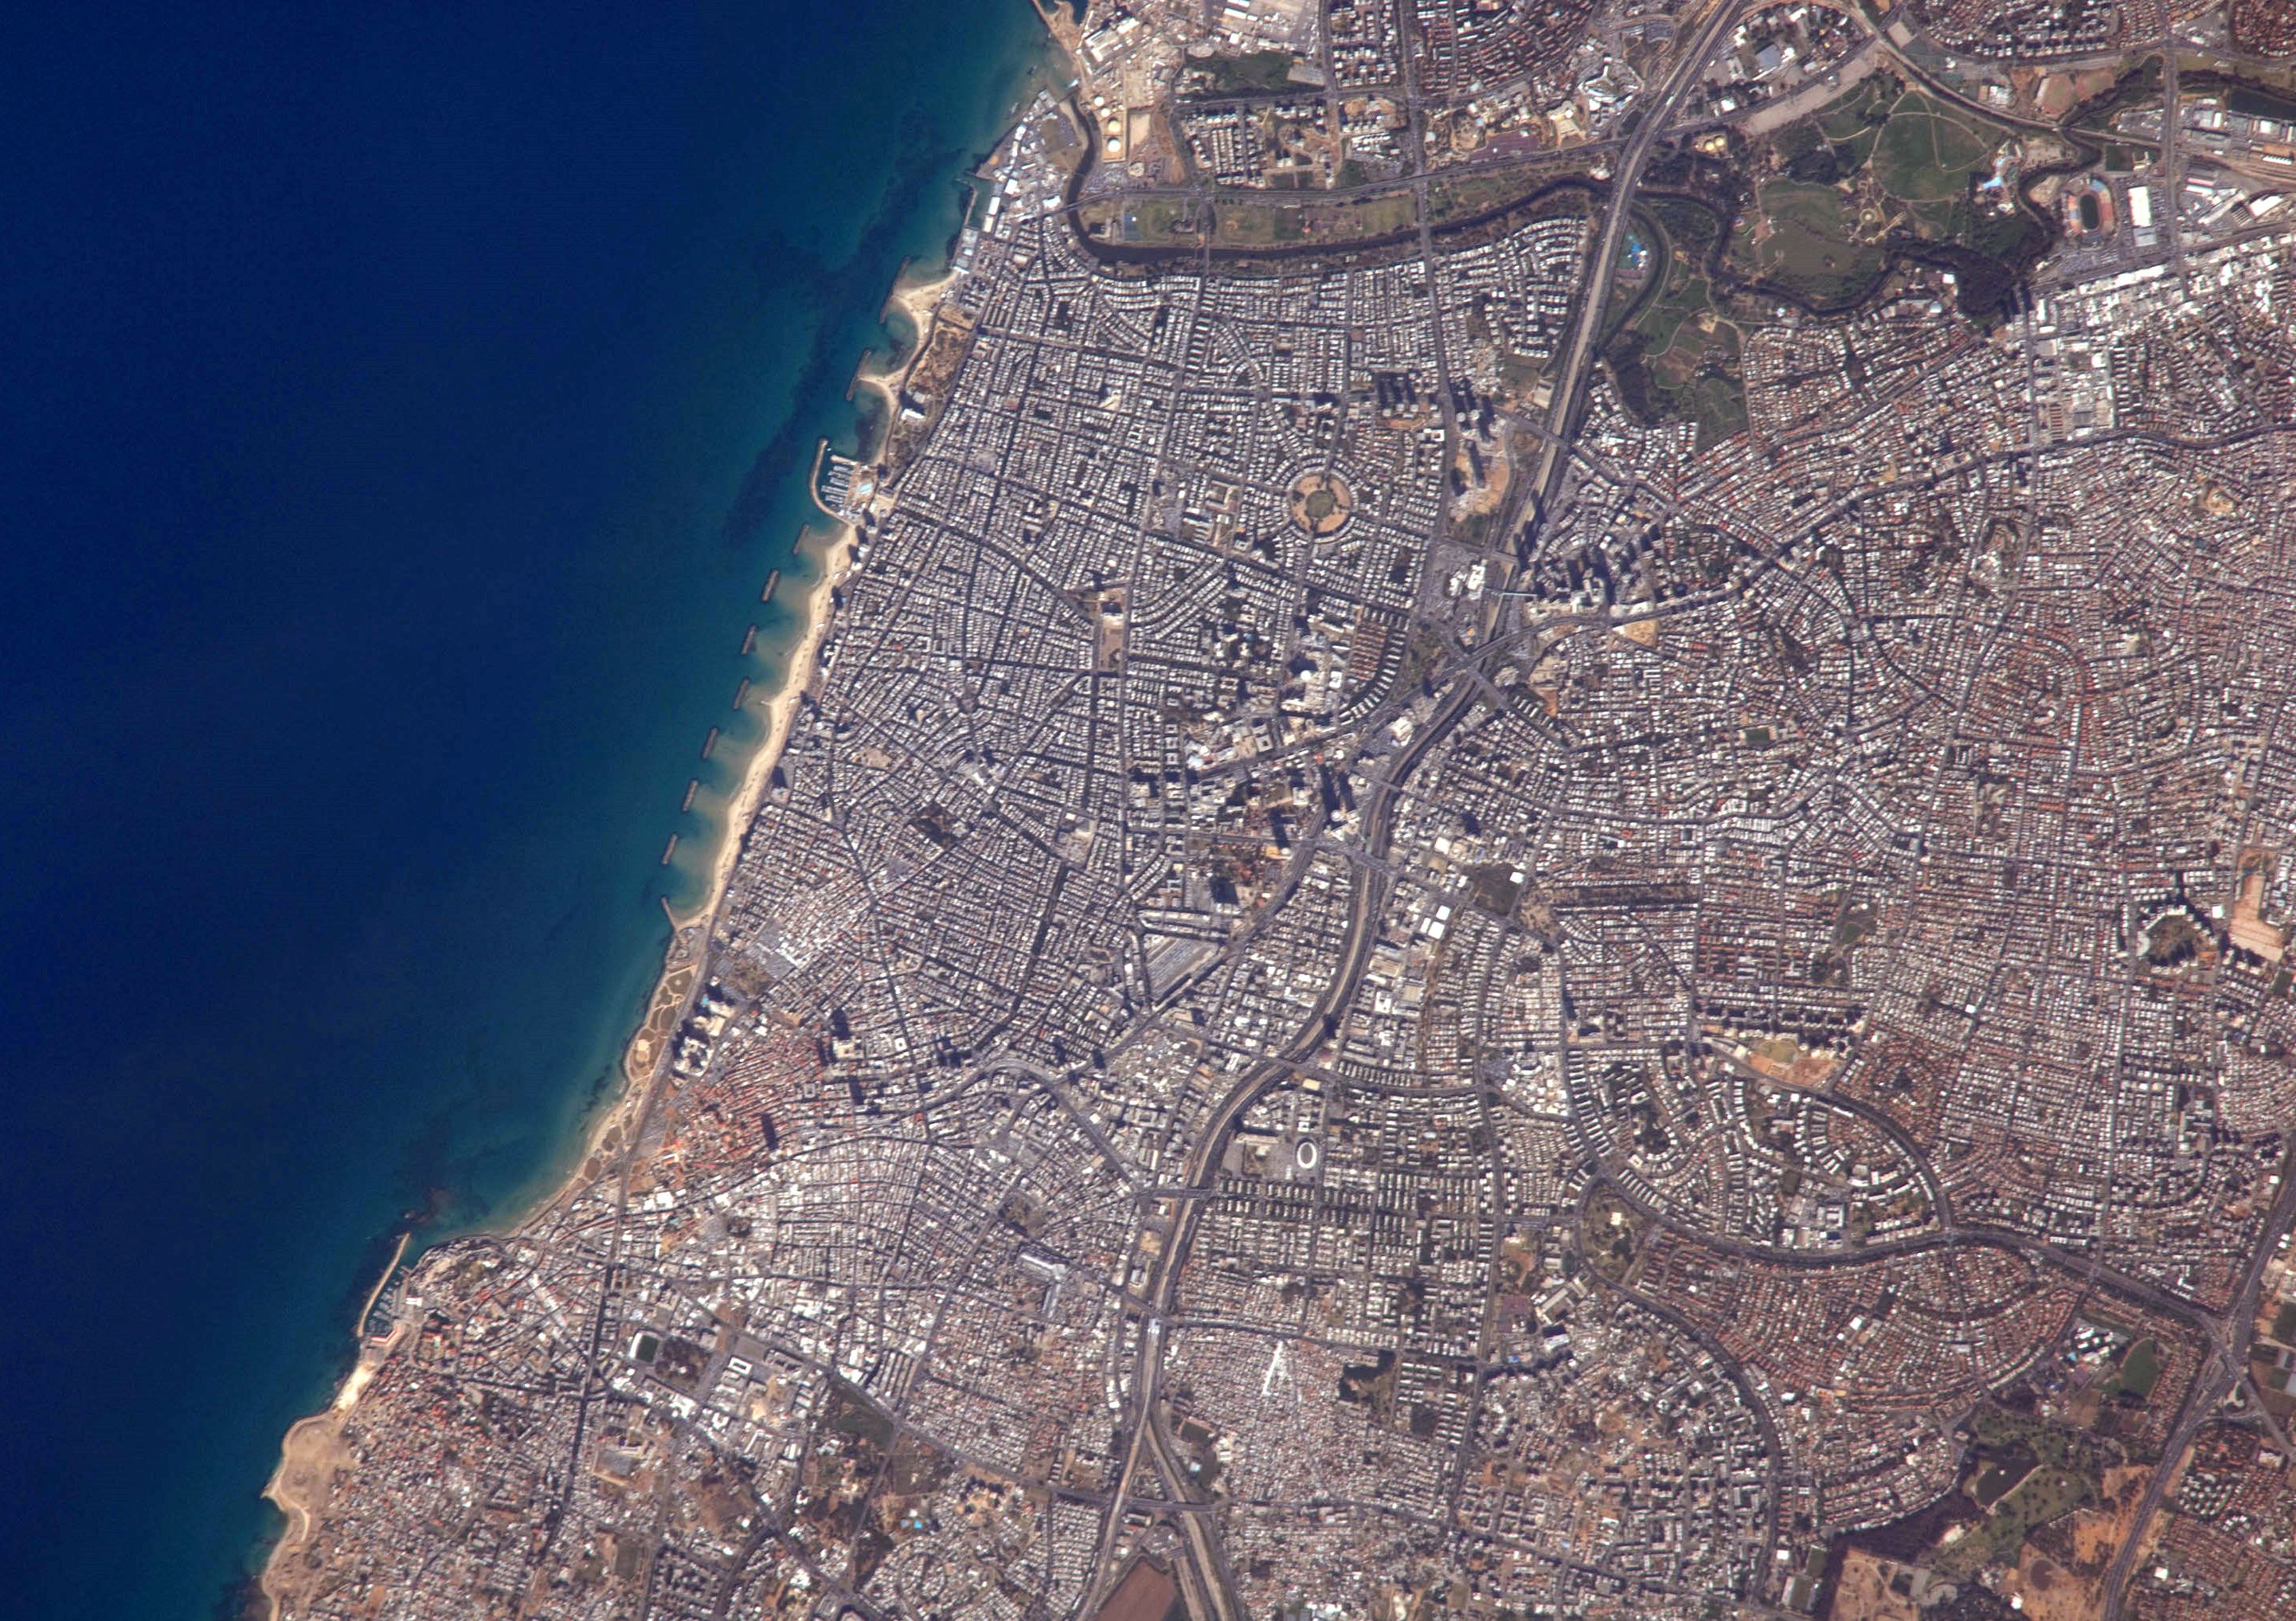 Tel Aviv from space